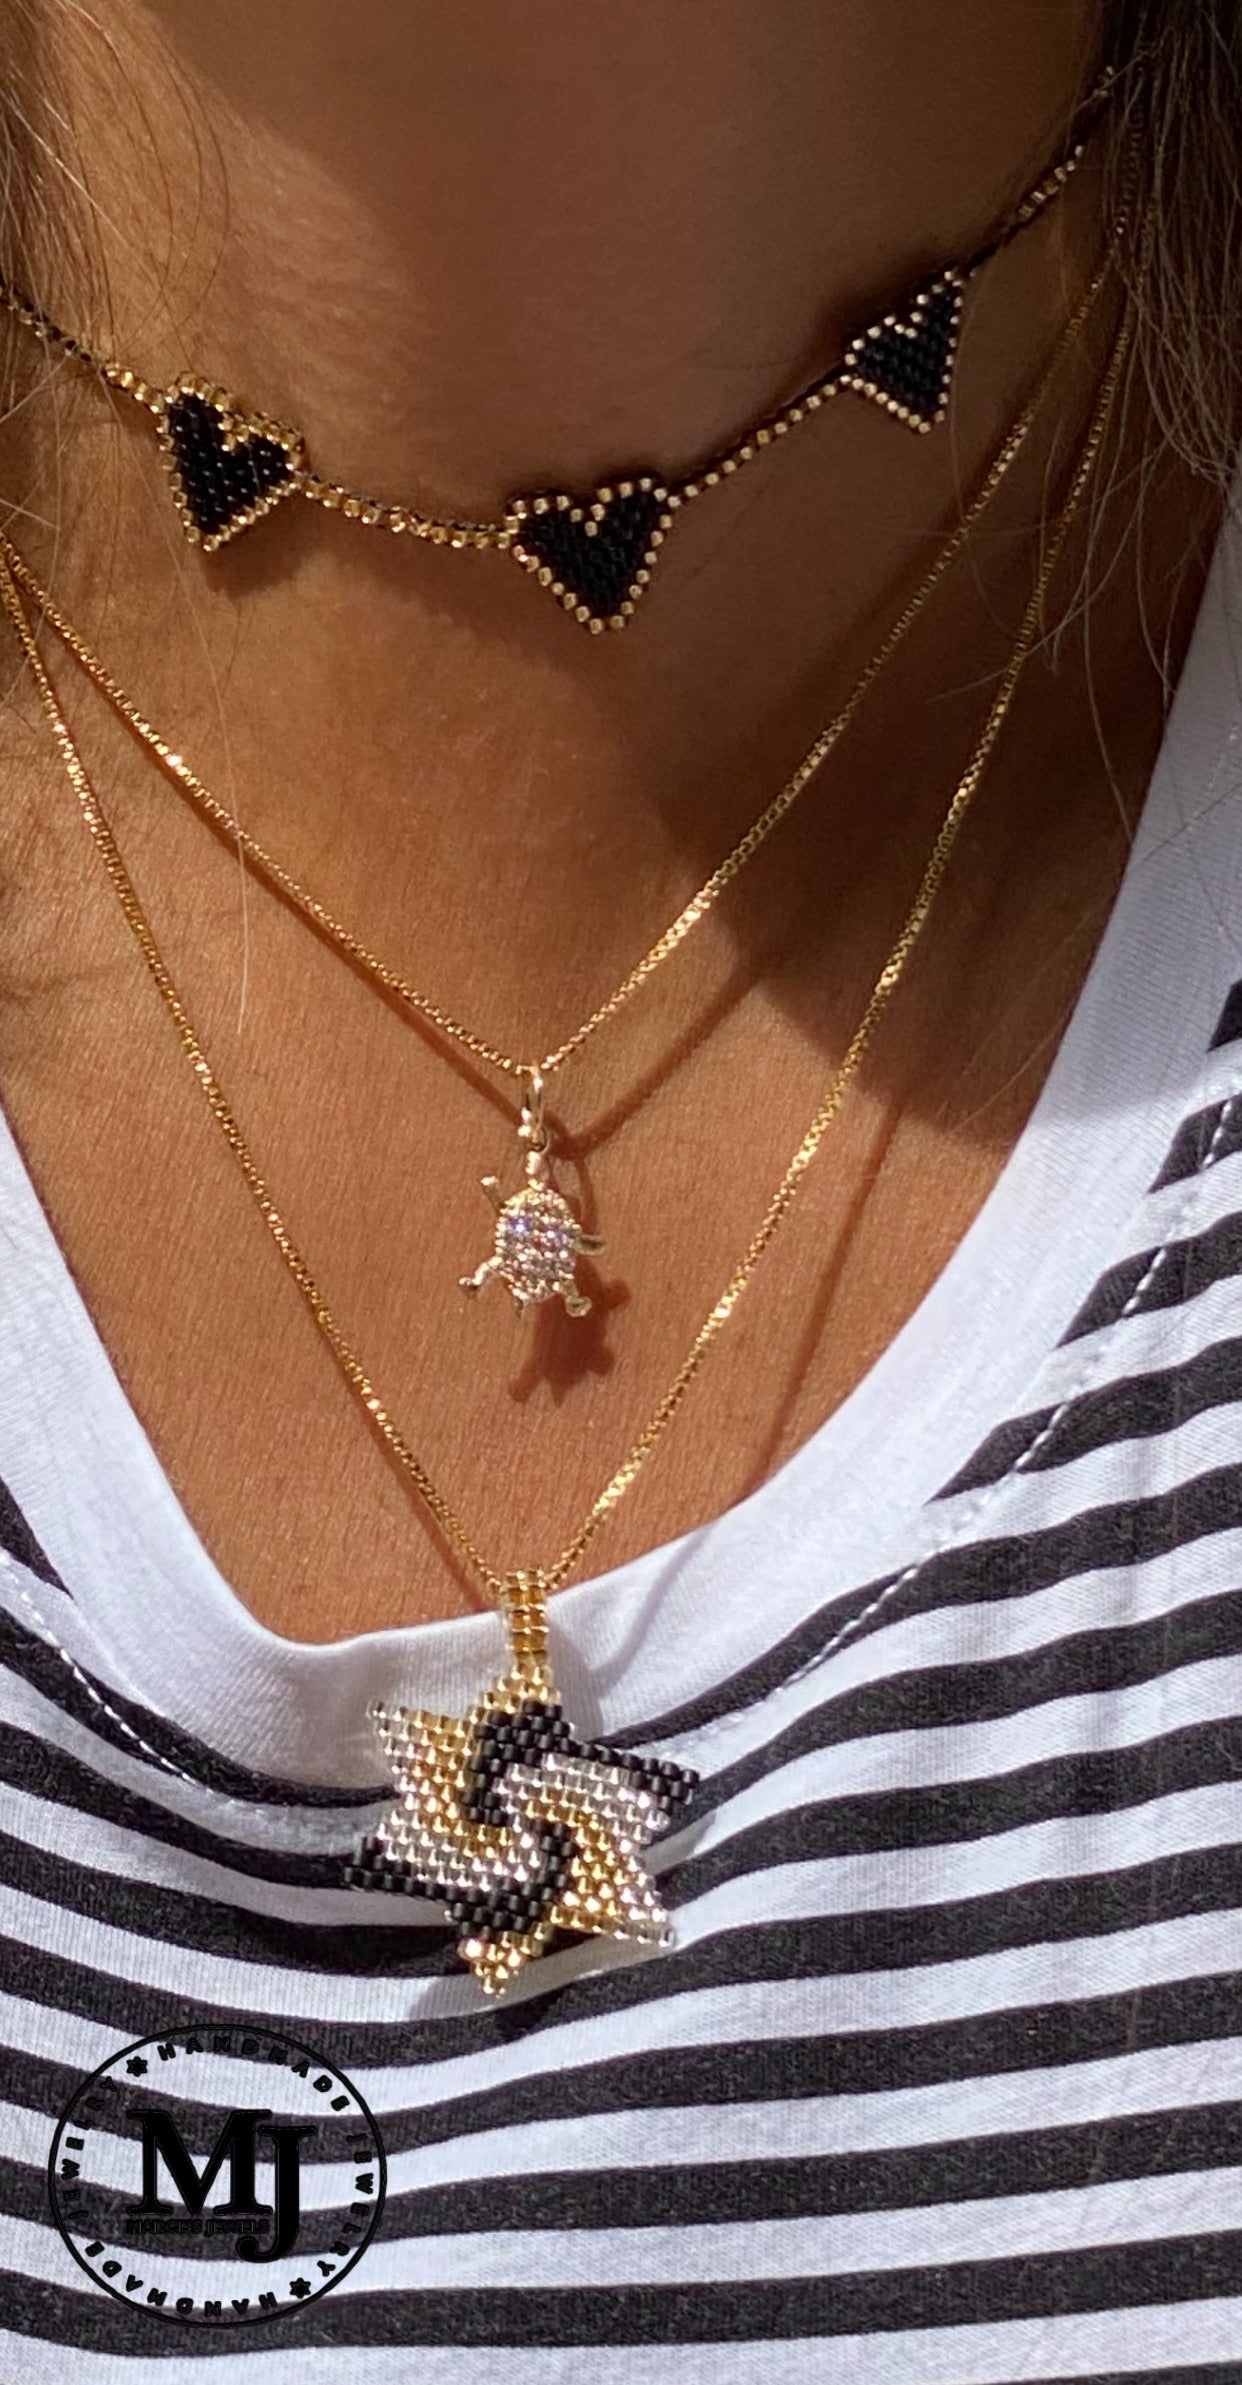 TURTLE necklace charm